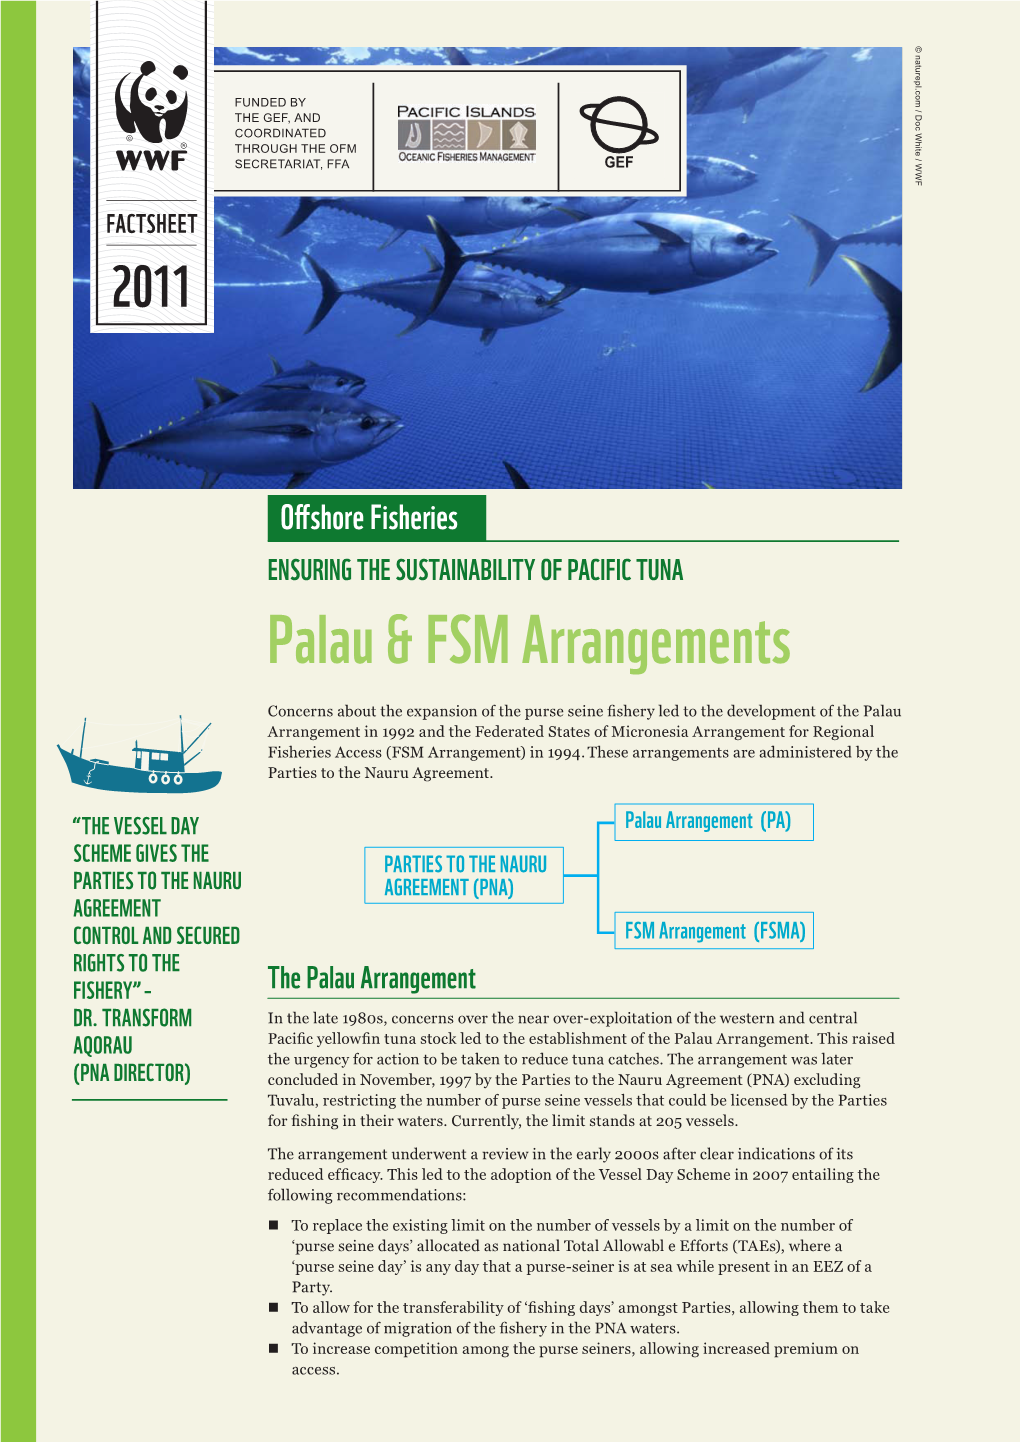 Palau & FSM Arrangements